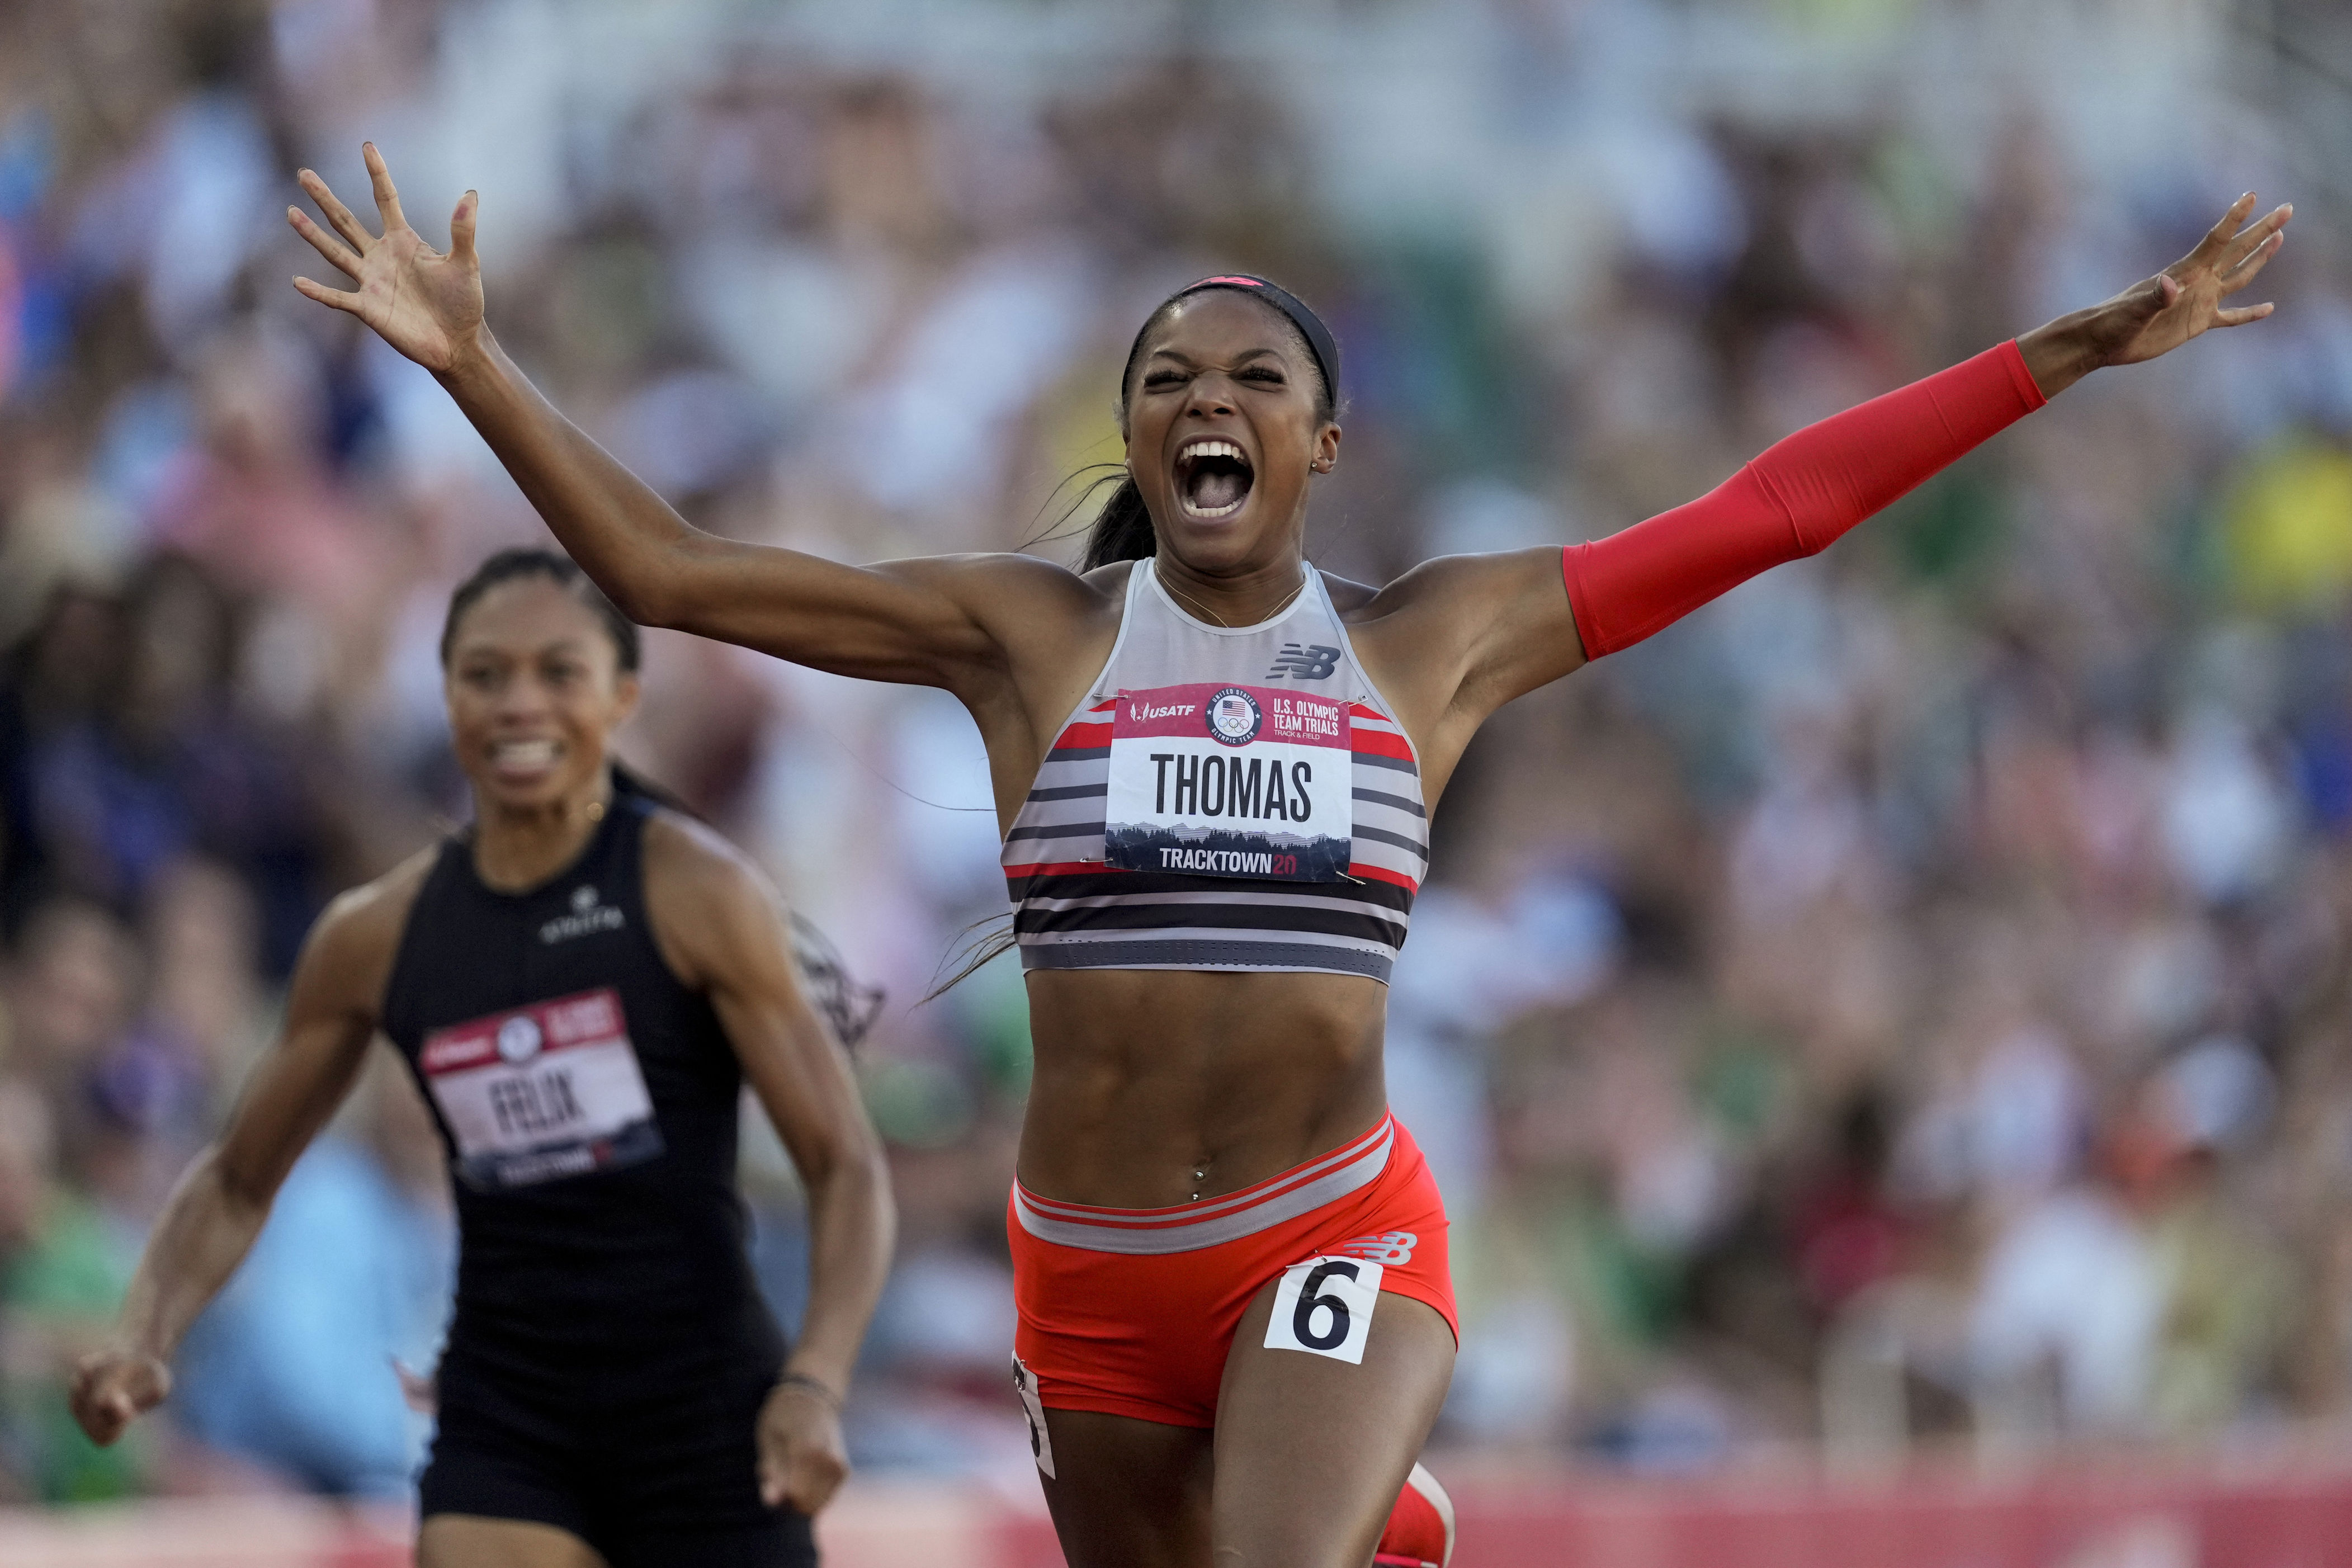 u.s. women’s track olympians say photo was shocking but uniform isn’t